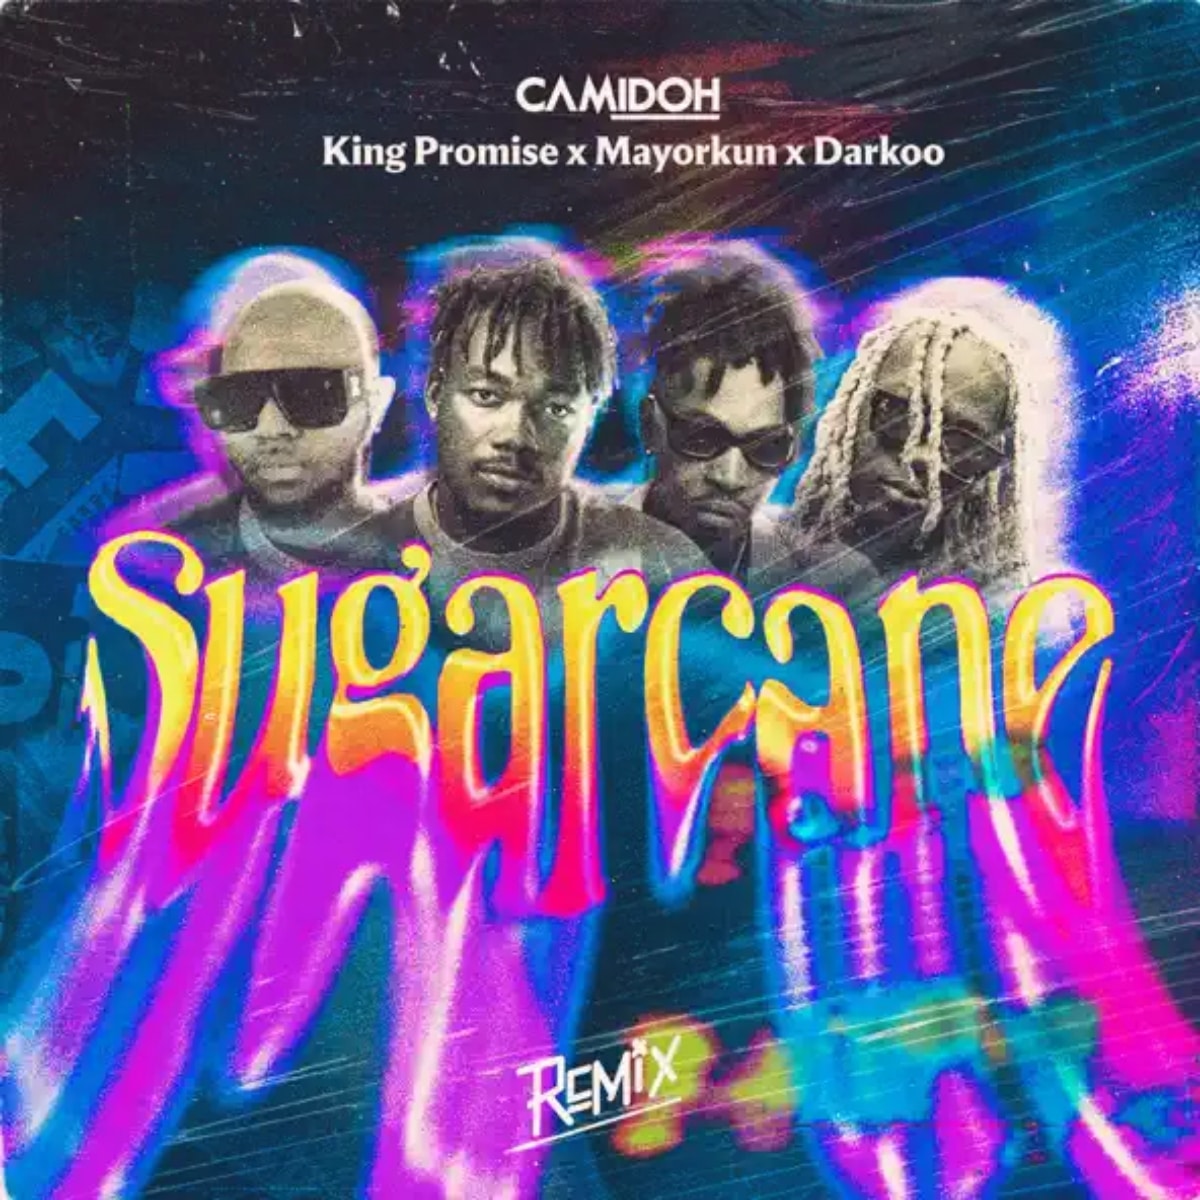 DOWNLOAD: Camidoh Ft. Mayorkun, Darkoo – “Sugarcane Remix” Mp3